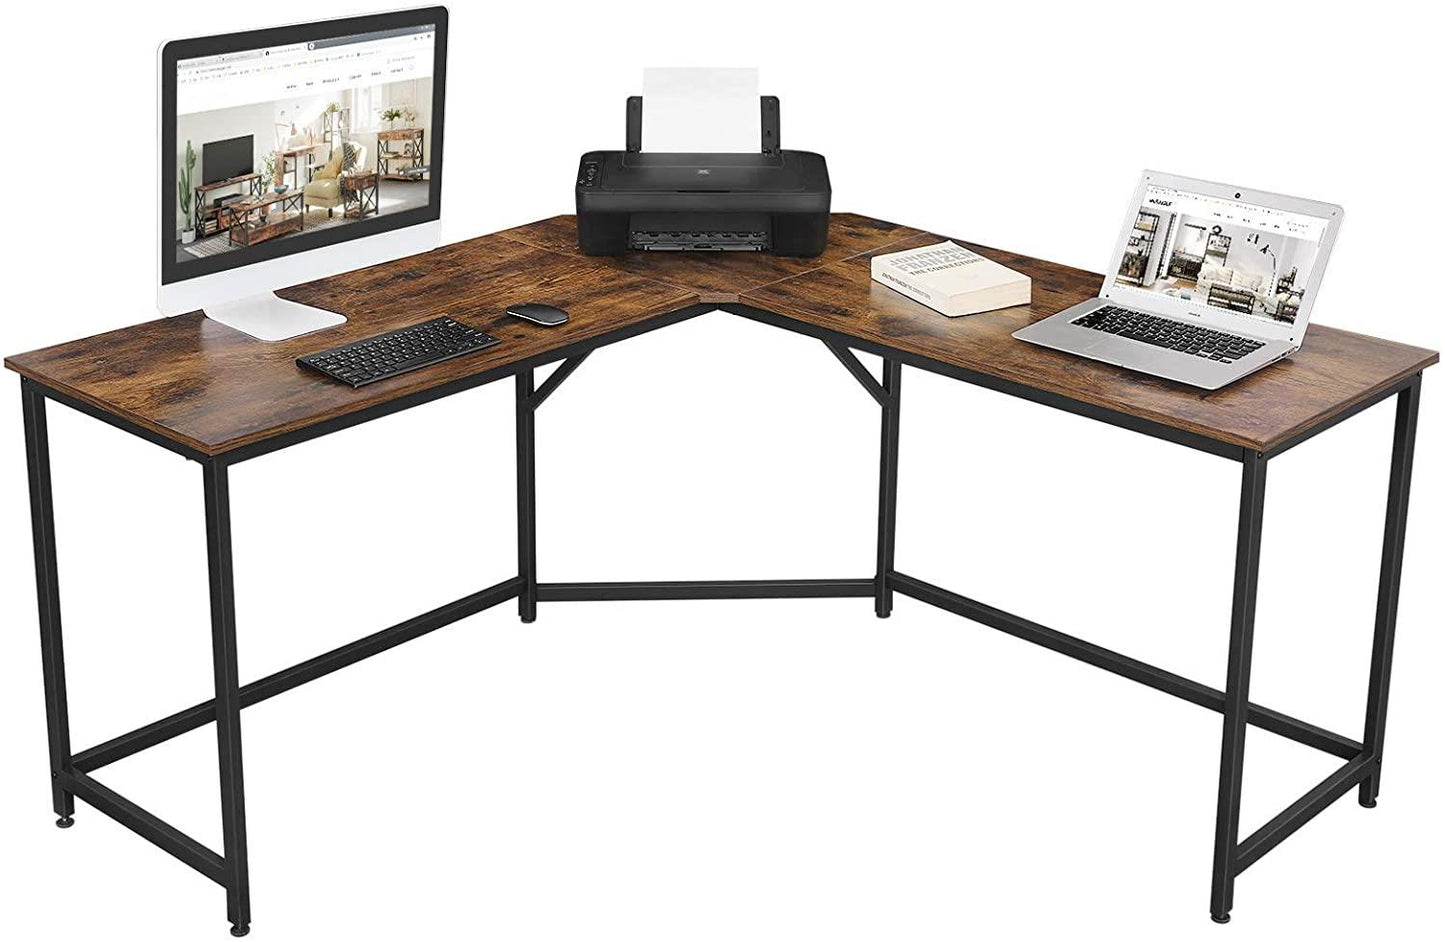 Sleek And Functional Computer Desk With Shelf